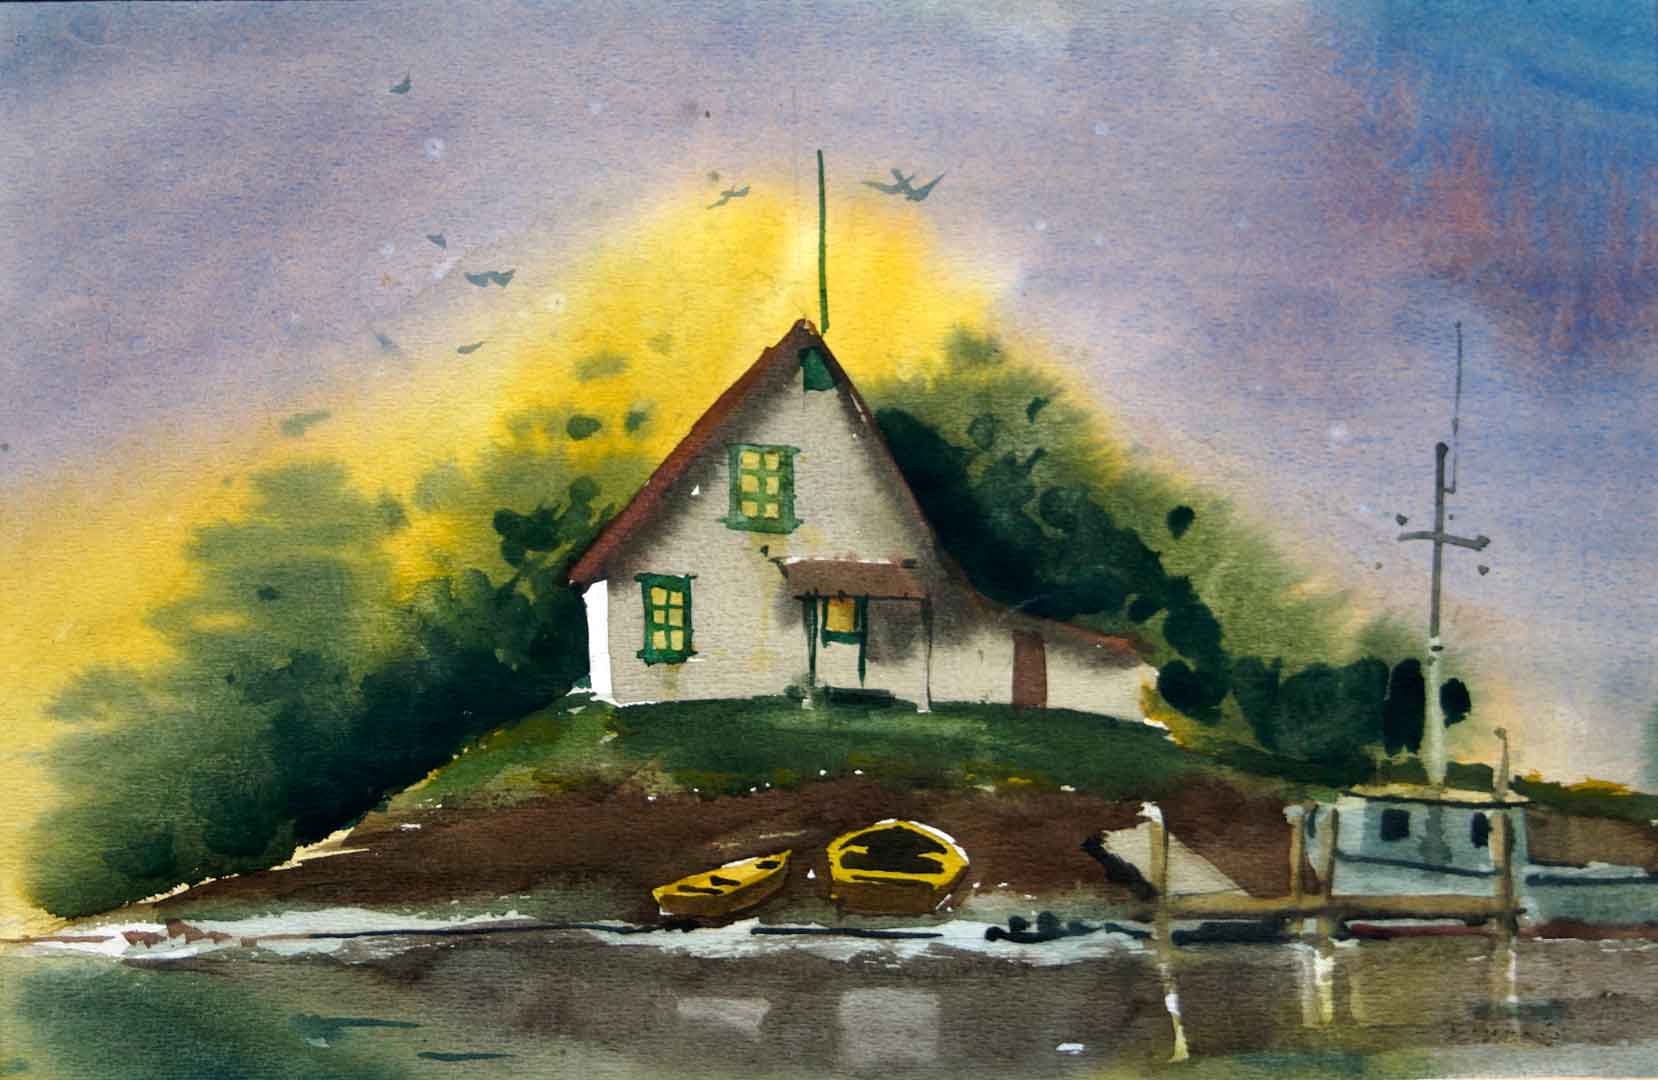 Franks Tract - San Joaquin River Delta, Watercolor on paper, 17.5 x 11.5